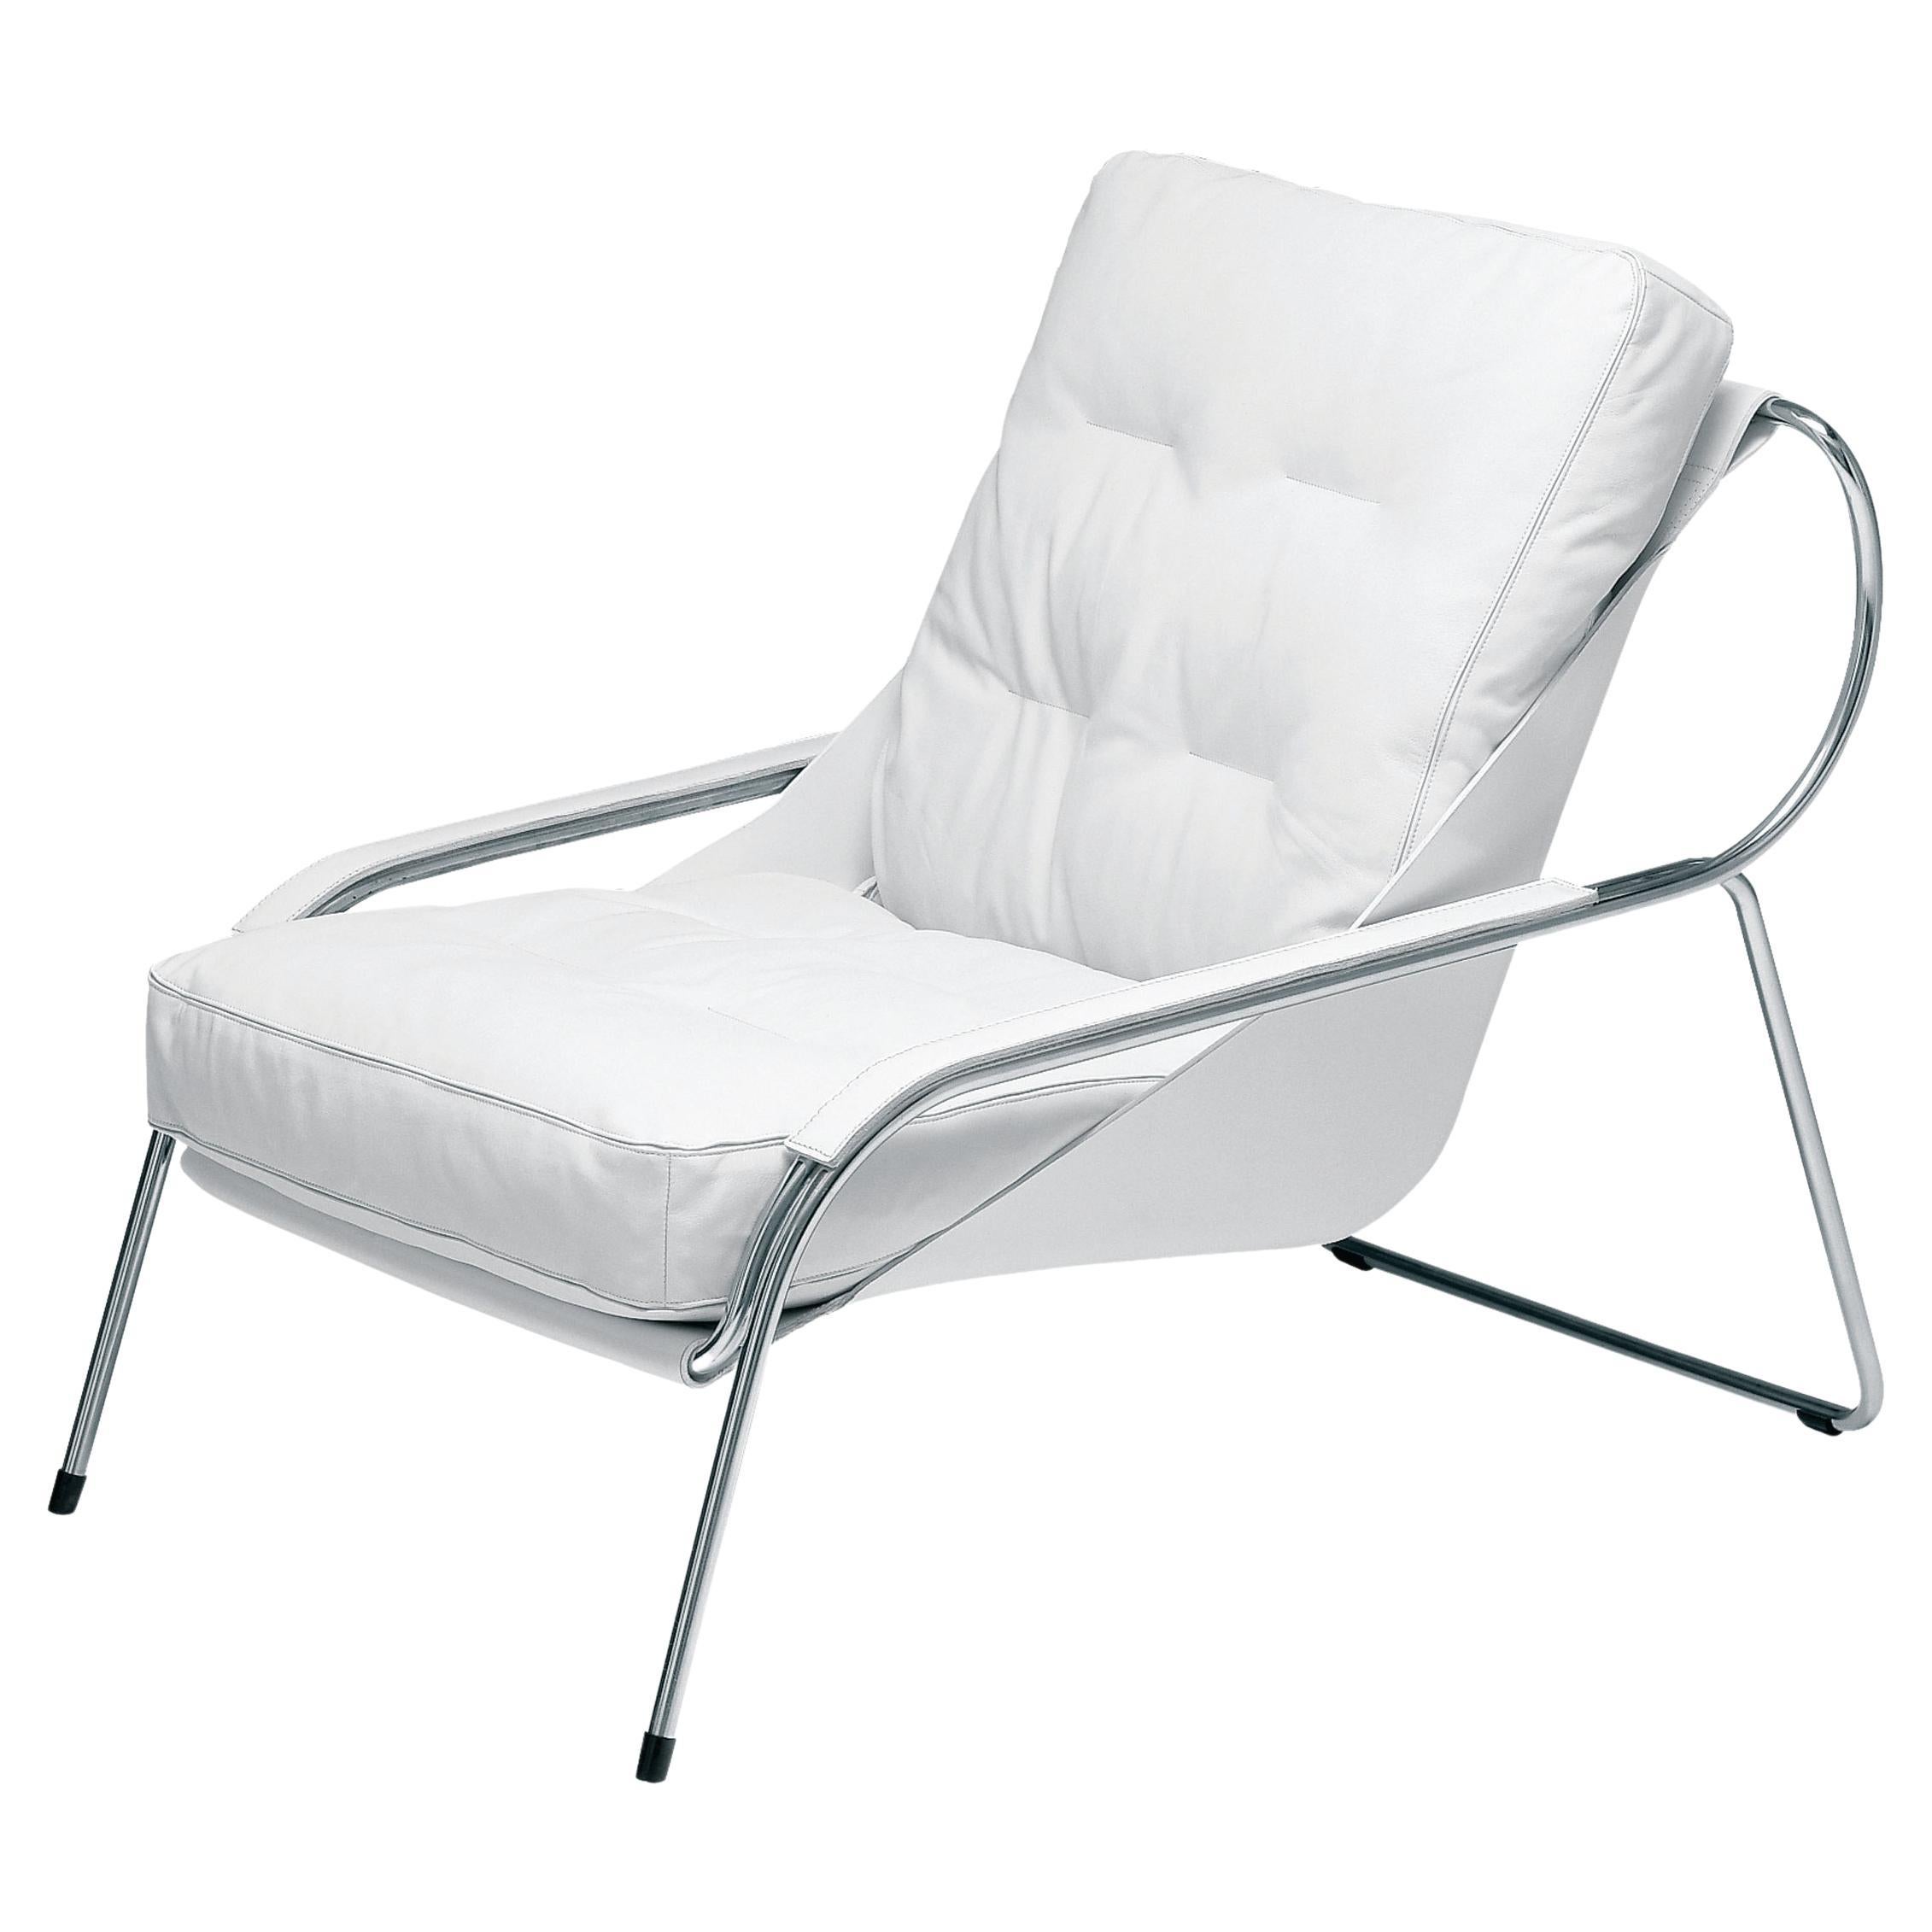 Zanotta Maggiolina Lounge Chair in White Leather & Steel Frame by Marco Zanuso